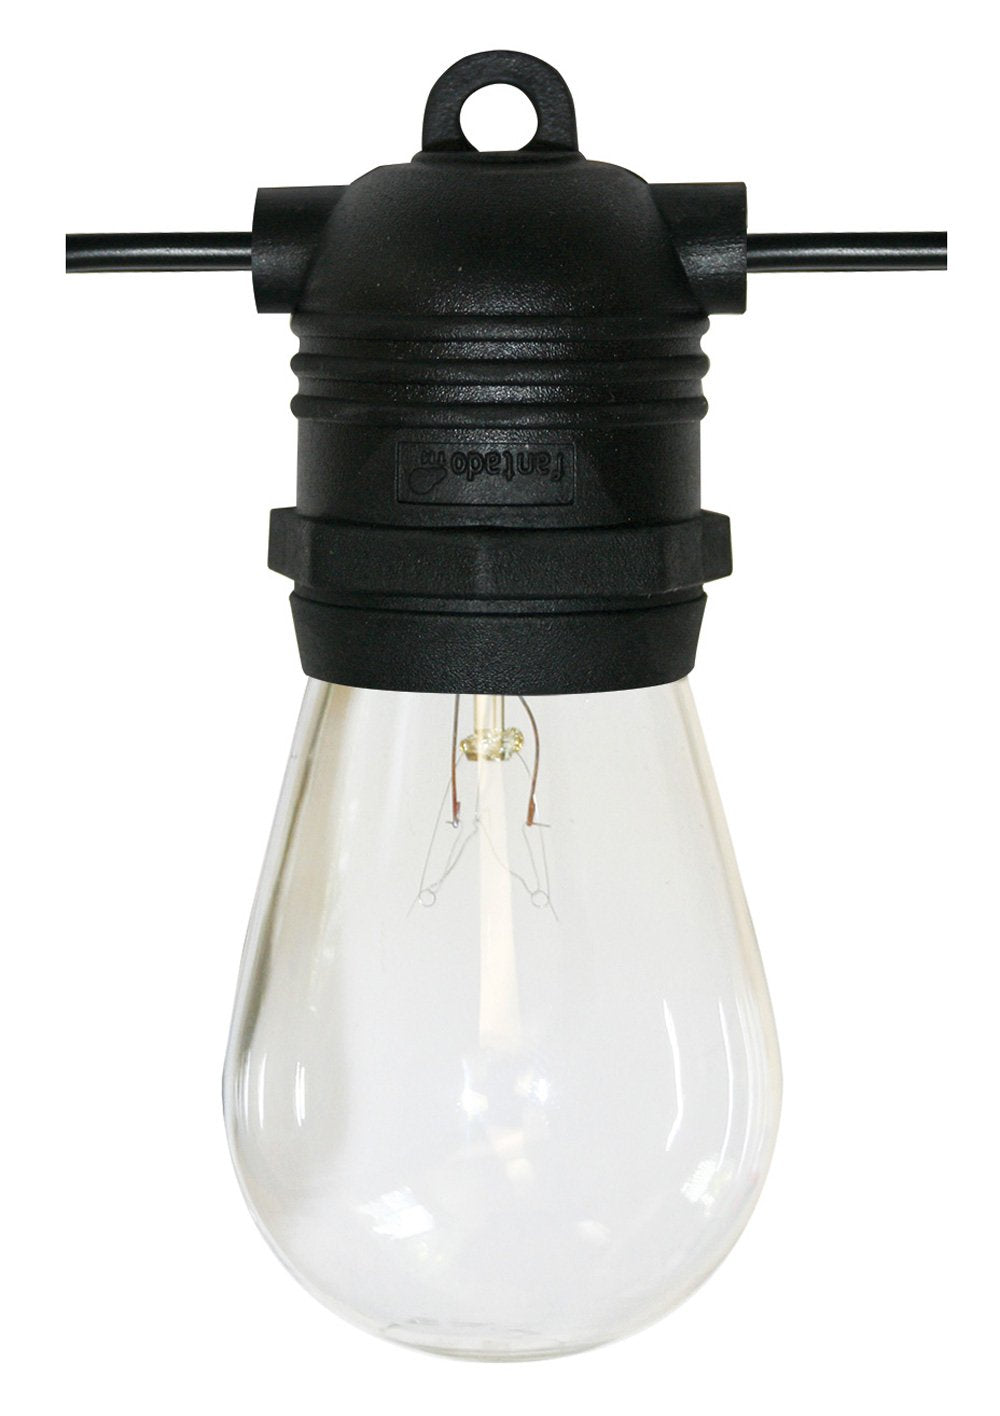 10 Socket Outdoor Commercial String Light Set, S14 Bulbs, 21 FT Black Cord w/ E26 Medium Base, Weatherproof SJTW